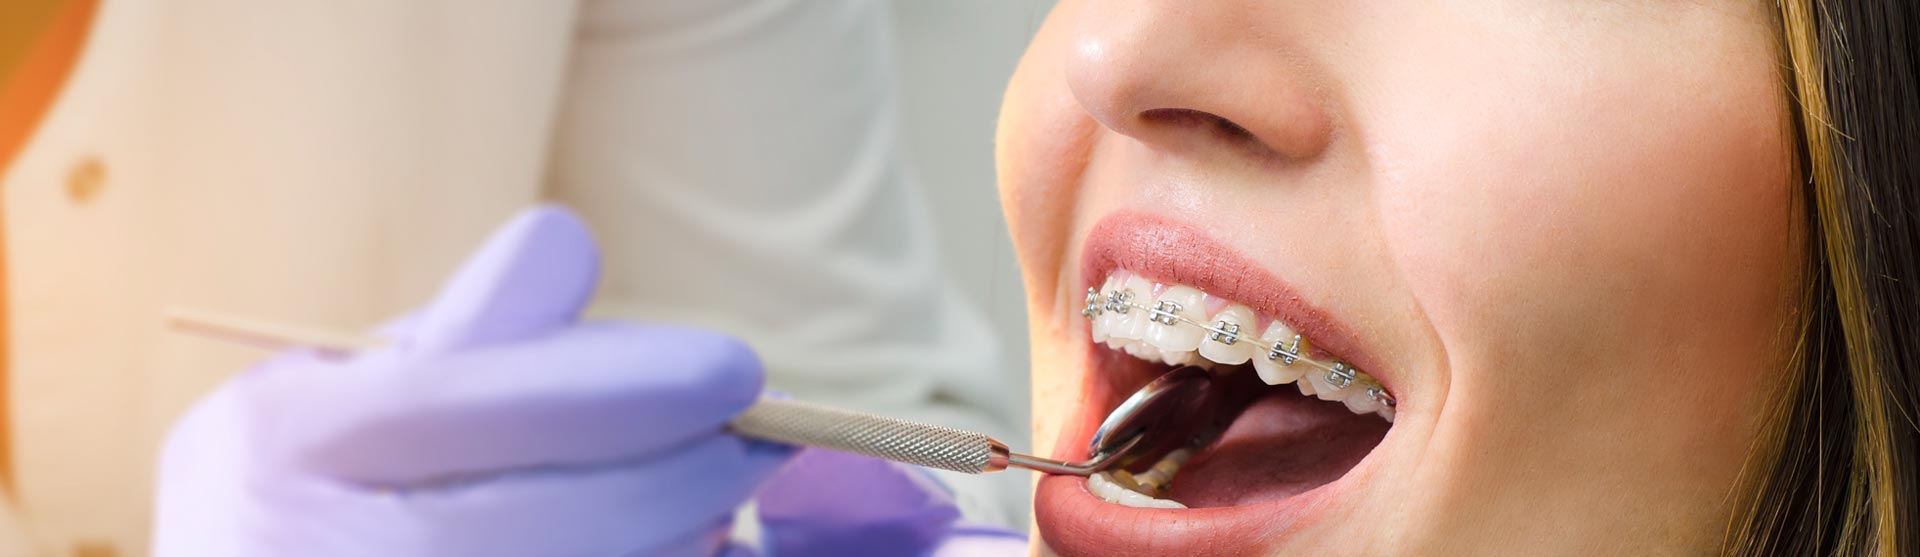 Dentist examining patient's orthodontics braces